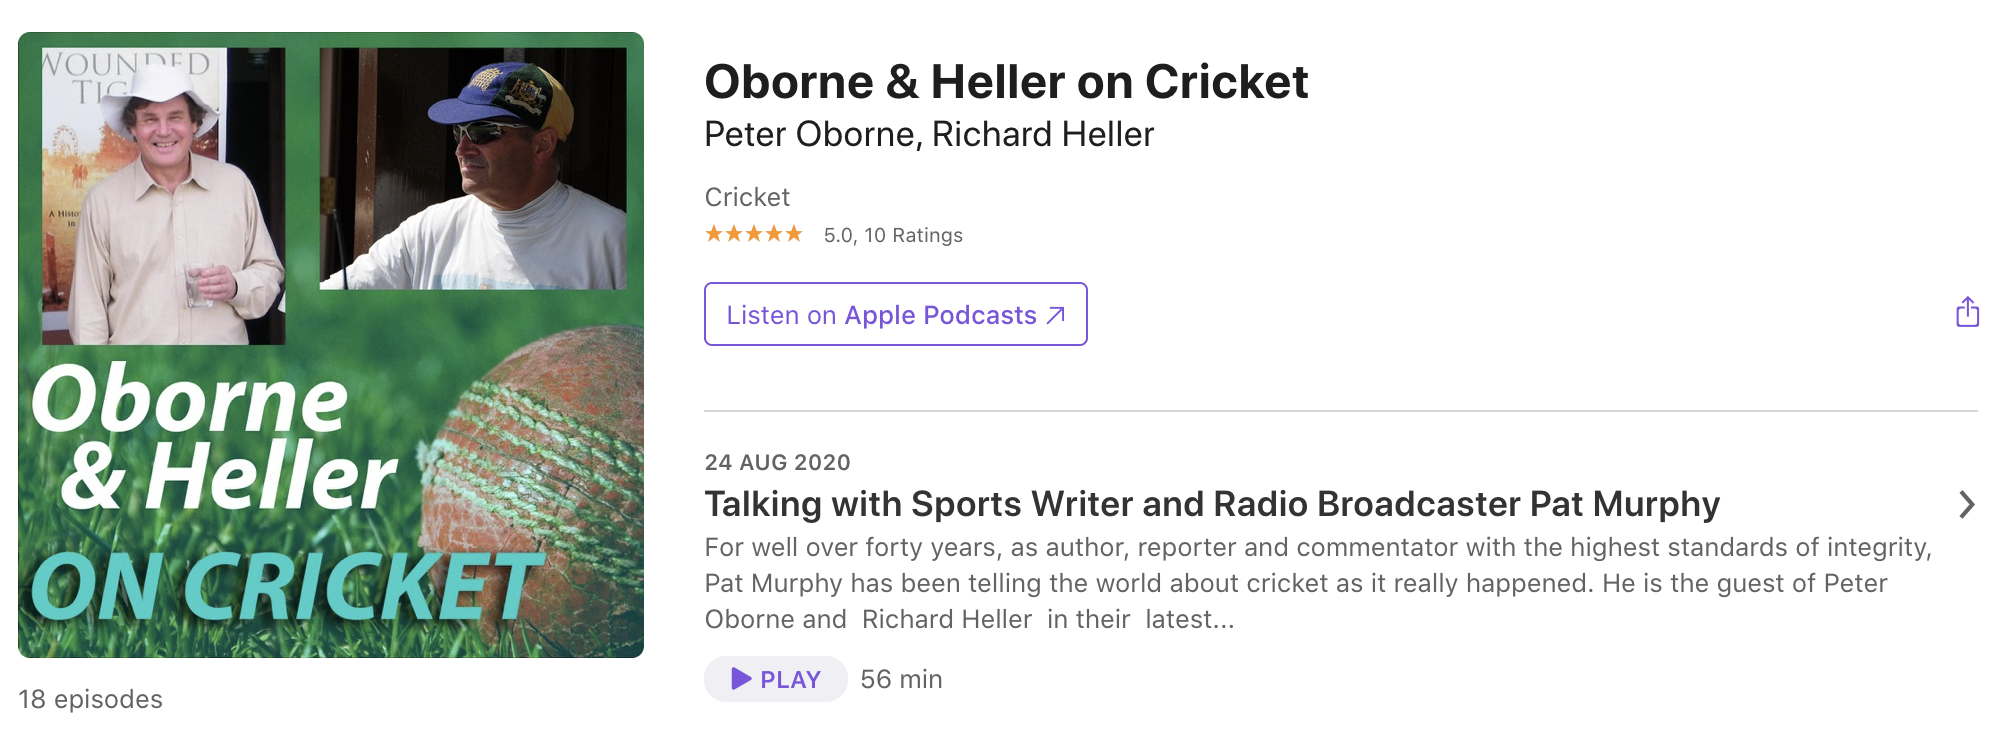 Osborne & Heller on Cricket